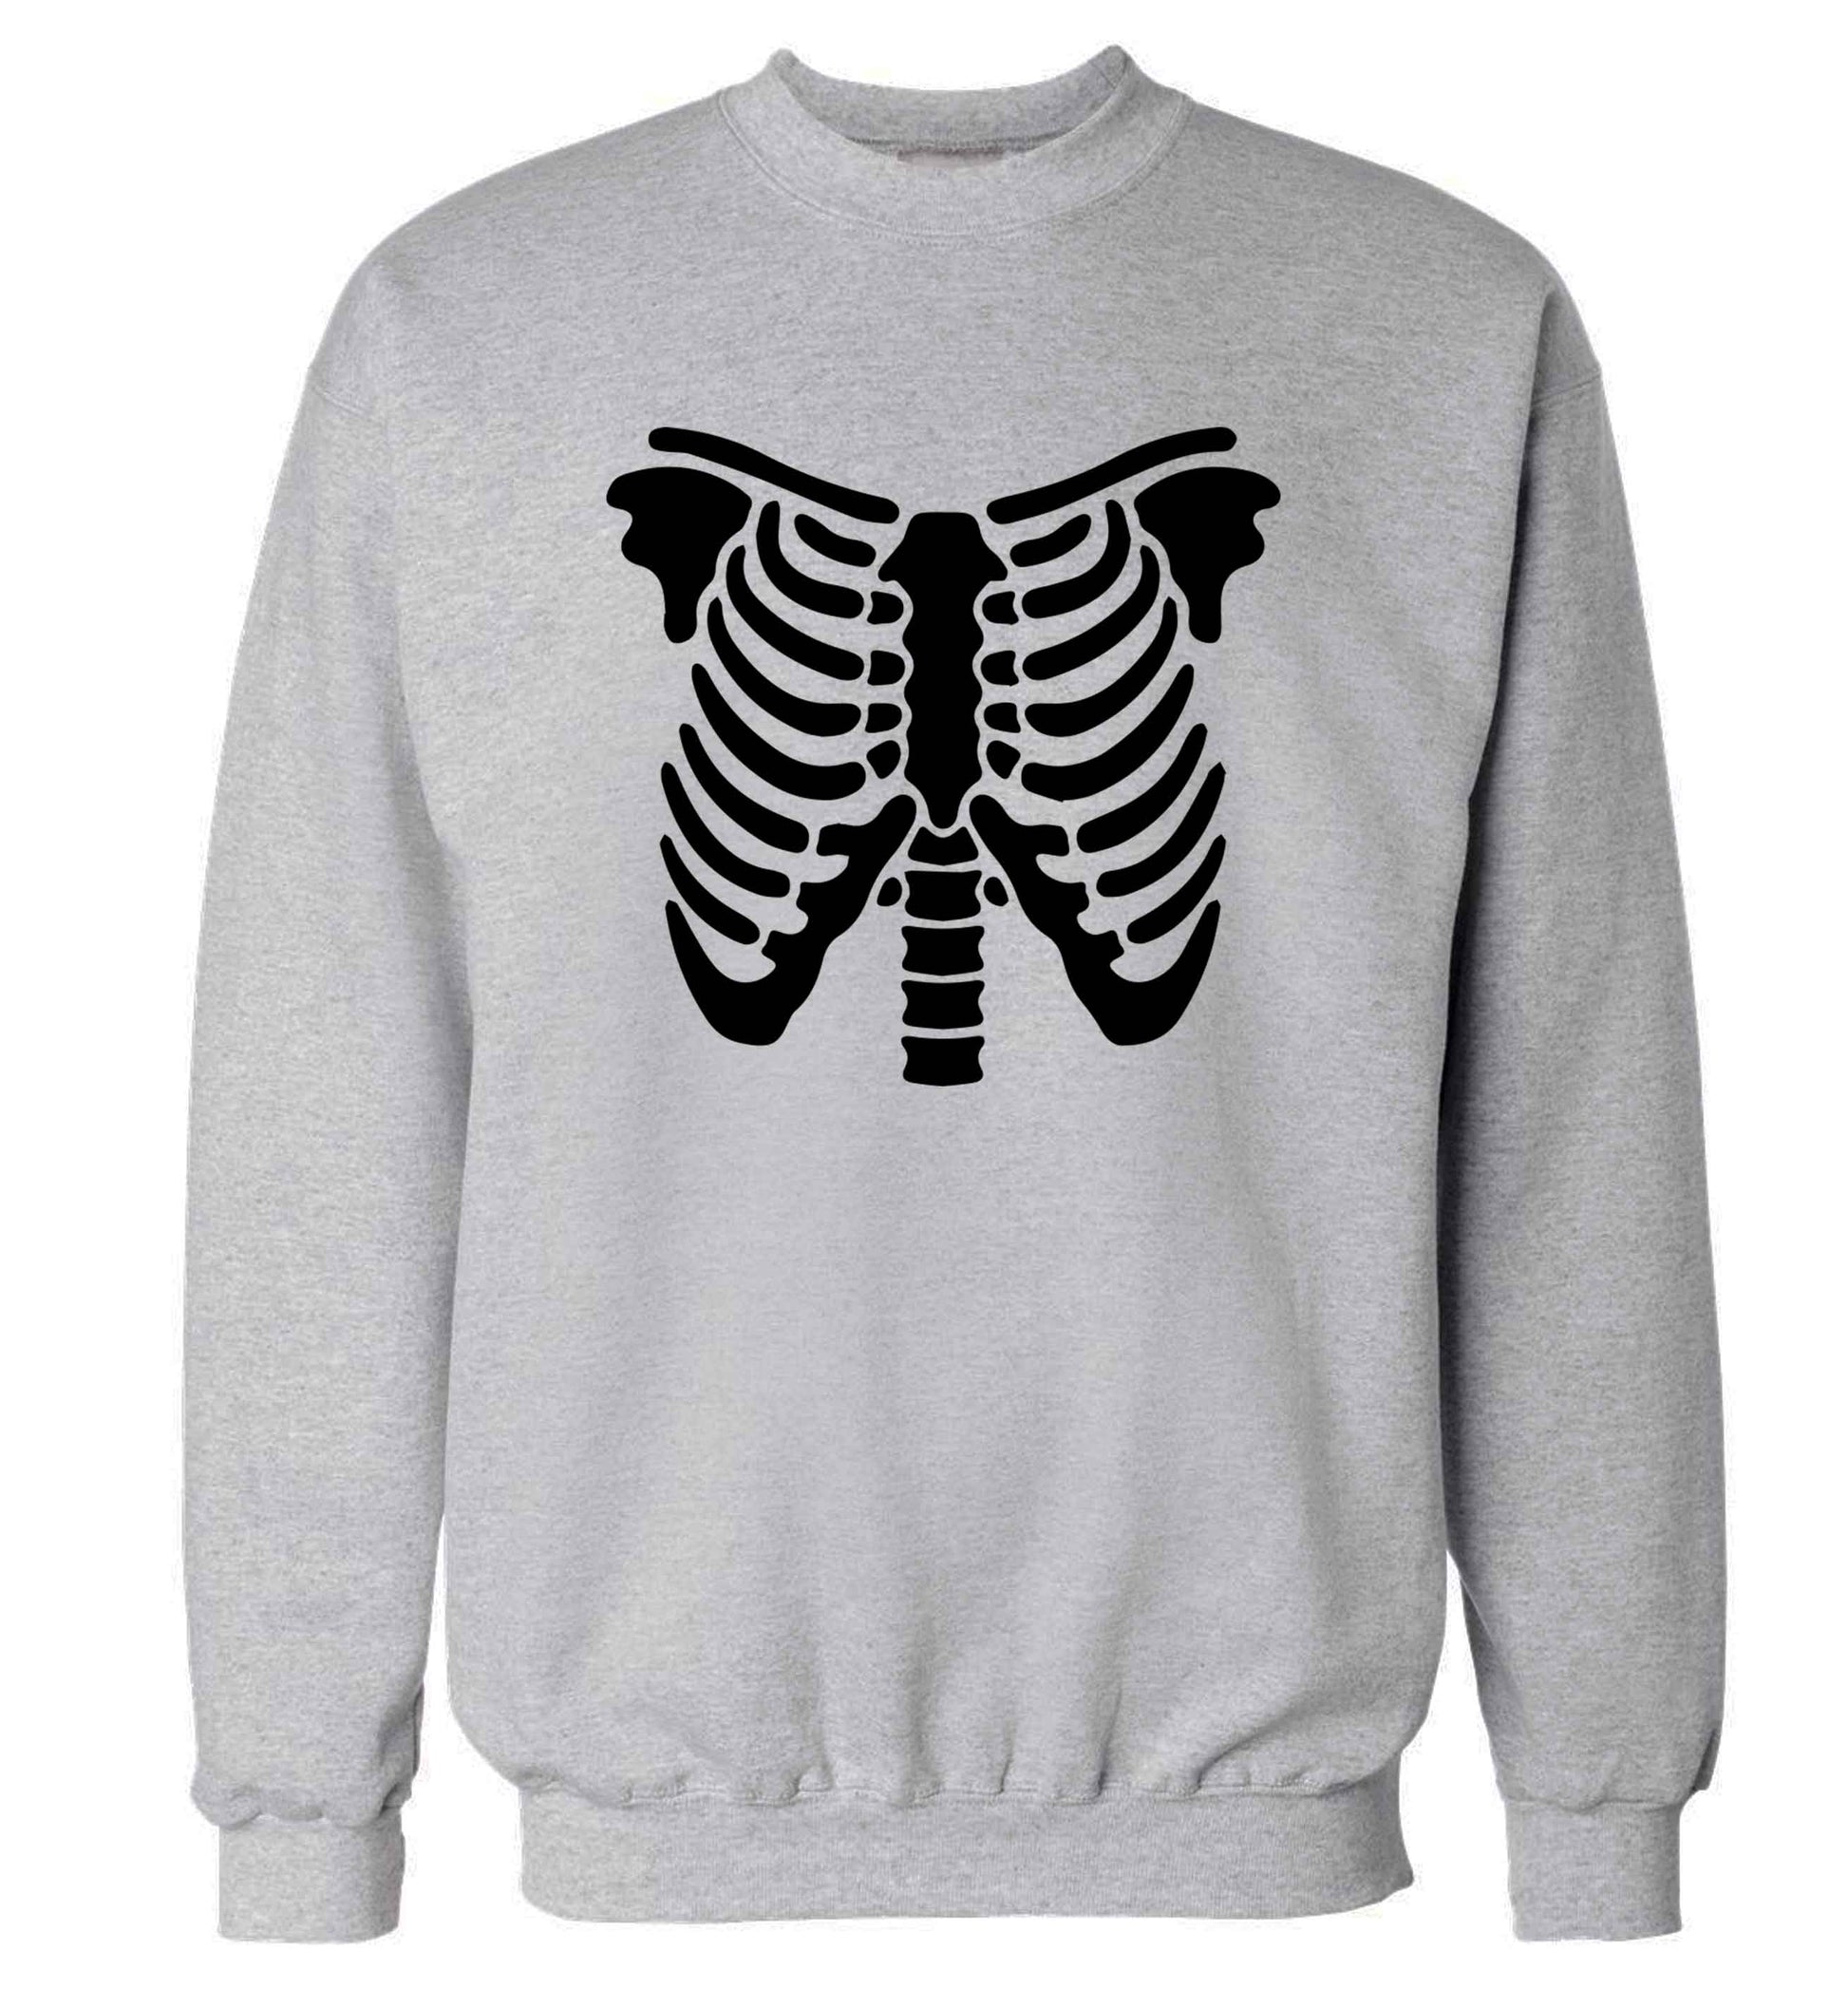 Skeleton ribcage adult's unisex grey sweater 2XL